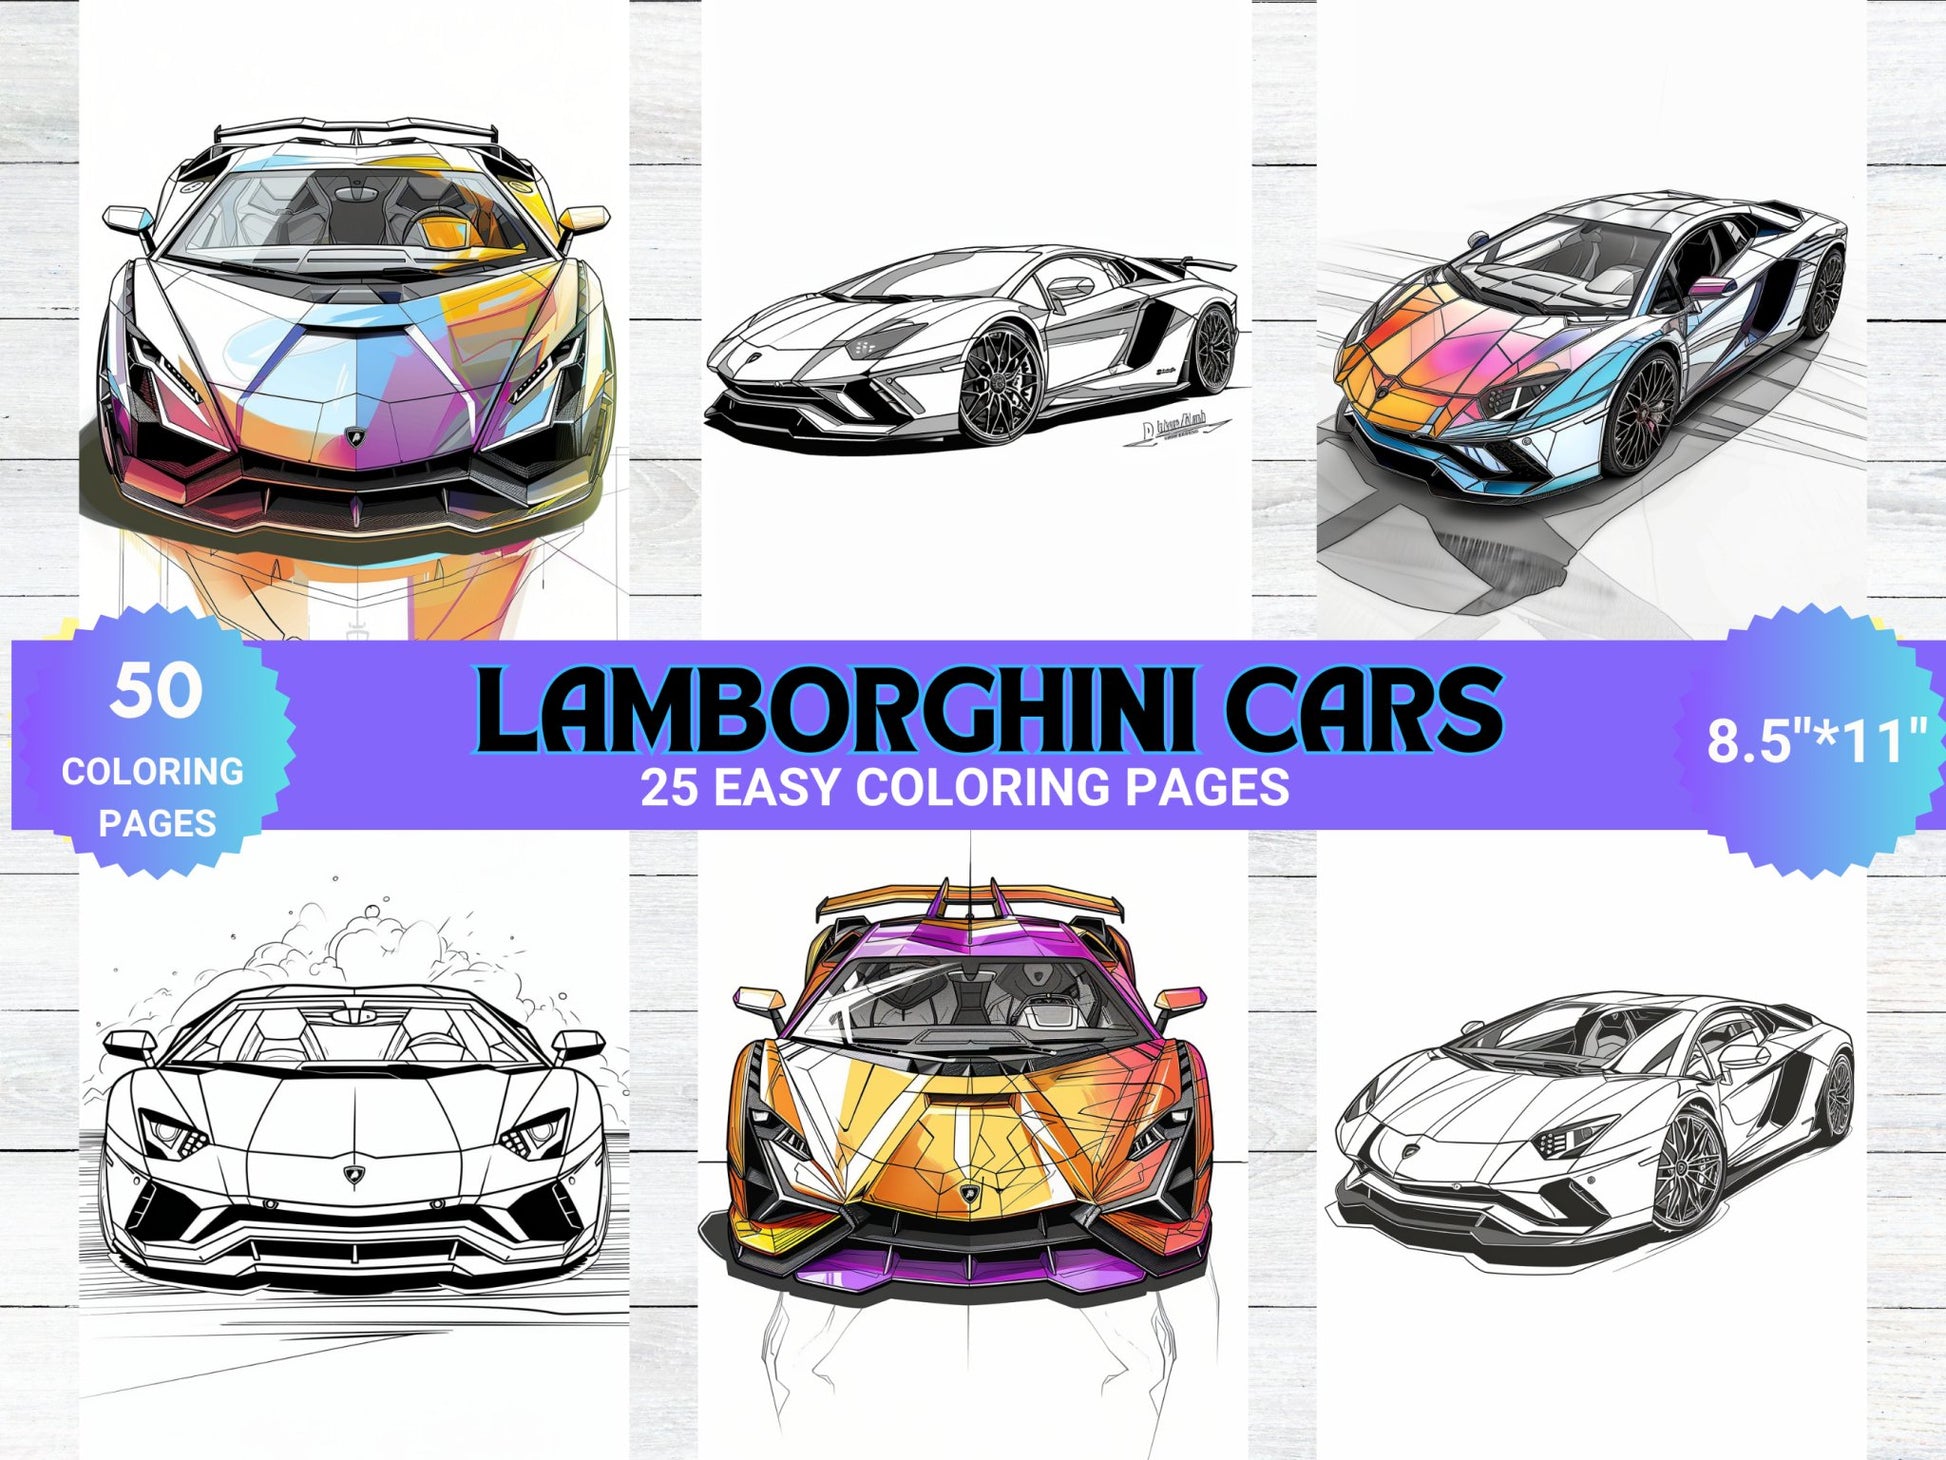 25 Free Lamborghini Coloring Sheets - My Coloring Zone